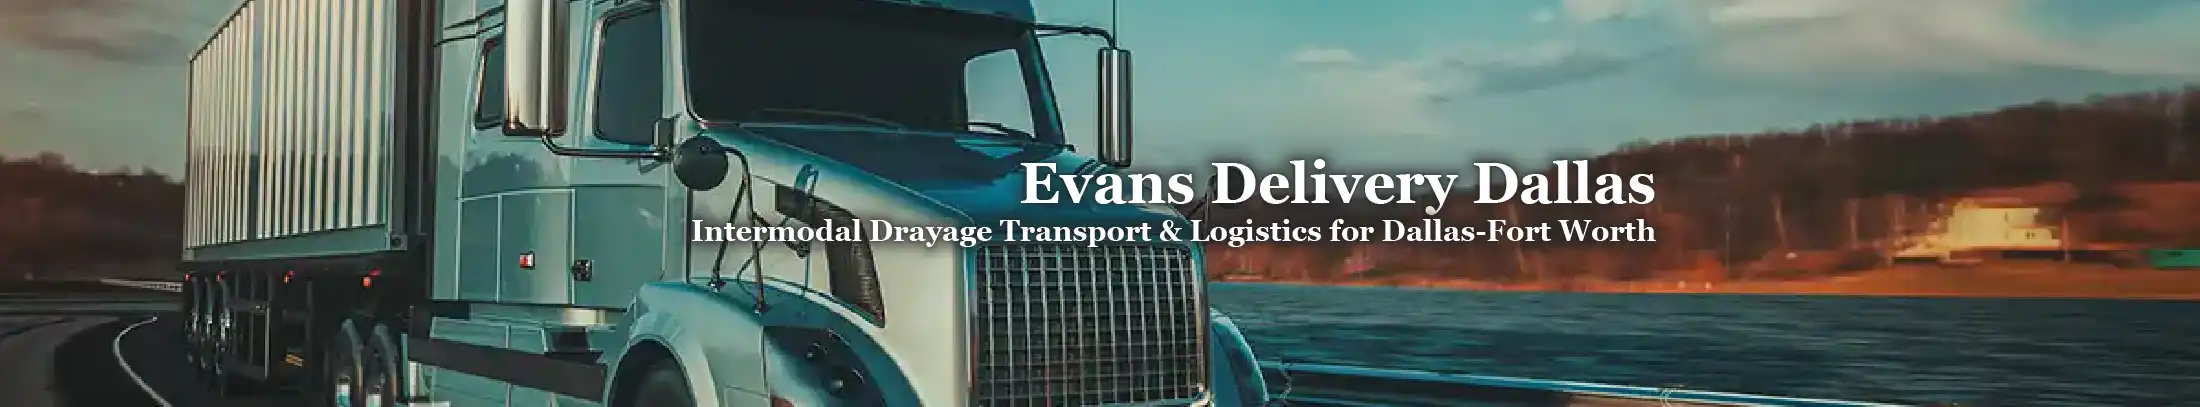 Evans Delivery Dallas Intermodal Drayage Transport and Logistics in Dallas-Fort Worth Texas